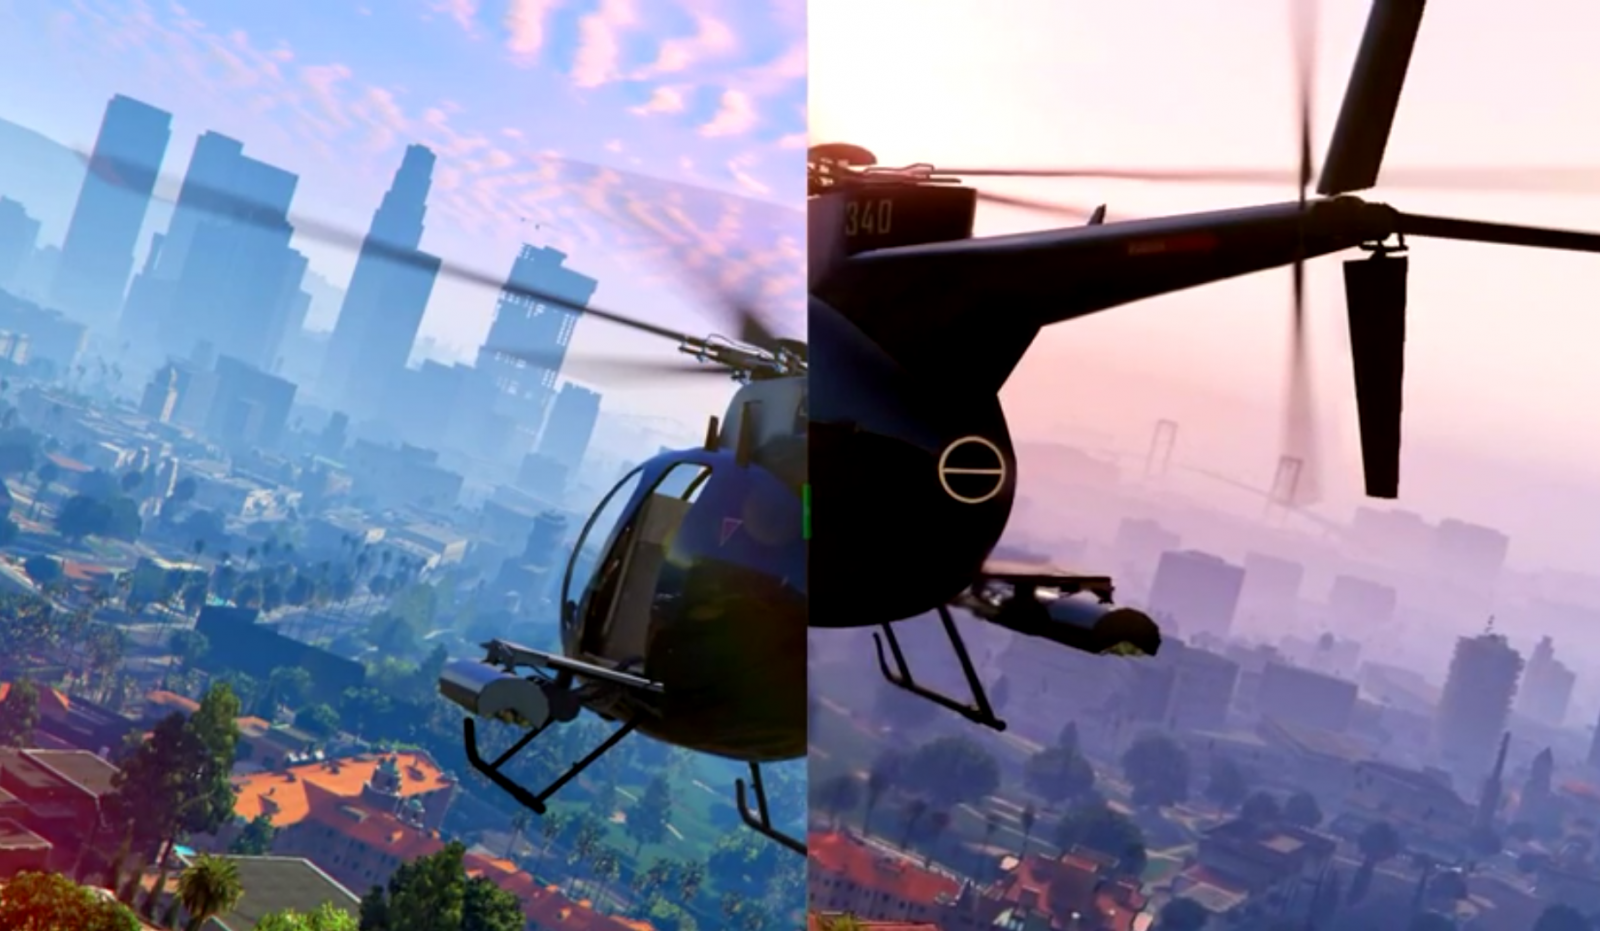 Gta V Gta 5 Ps4 Vs Ps3 Next Gen Graphics Gameplay Comparison Revealed Grand Theft Auto V Thesmackdownhotel Com Forum